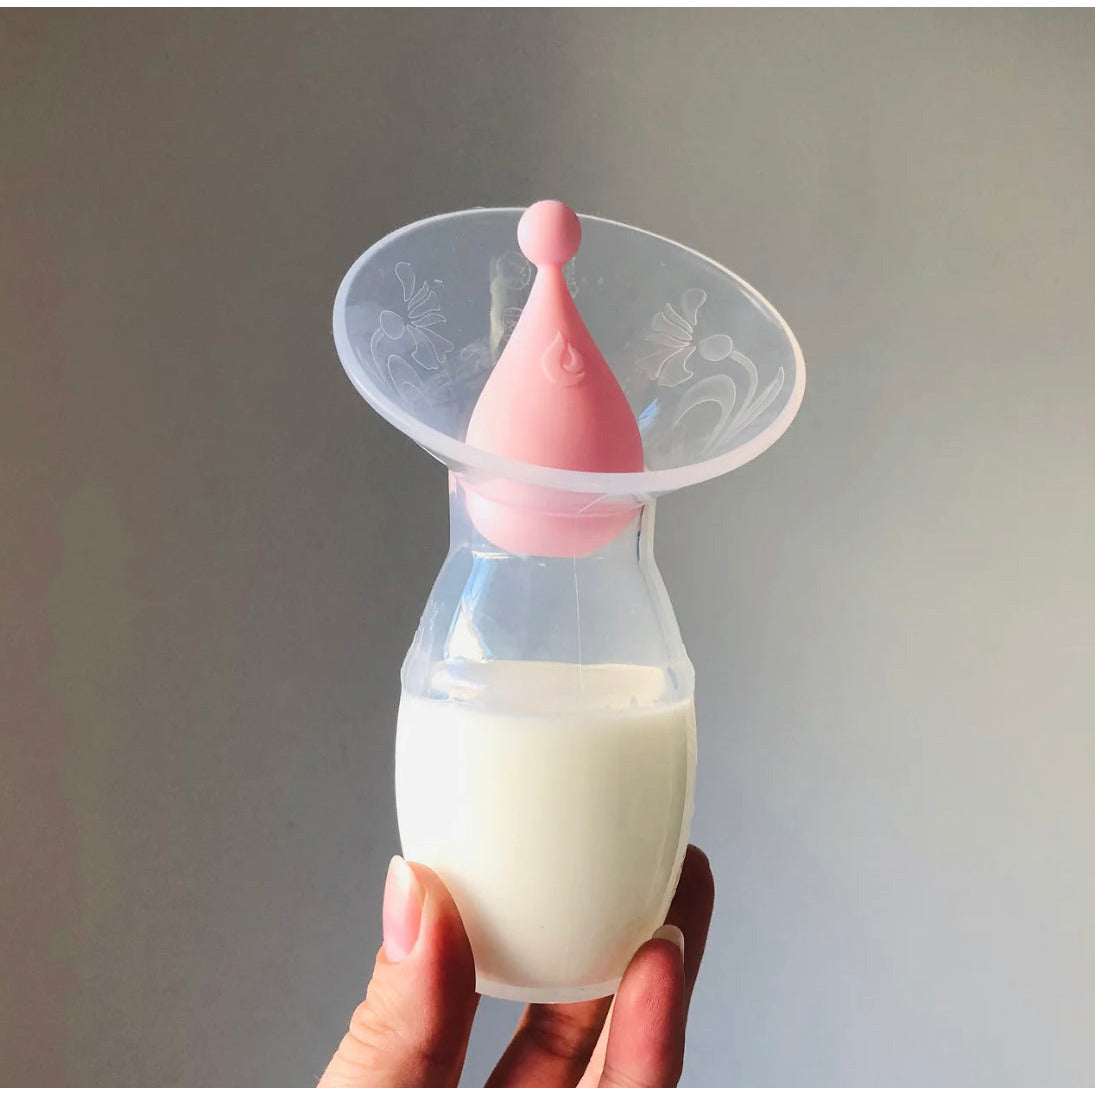 Breast Pump Milk Saver